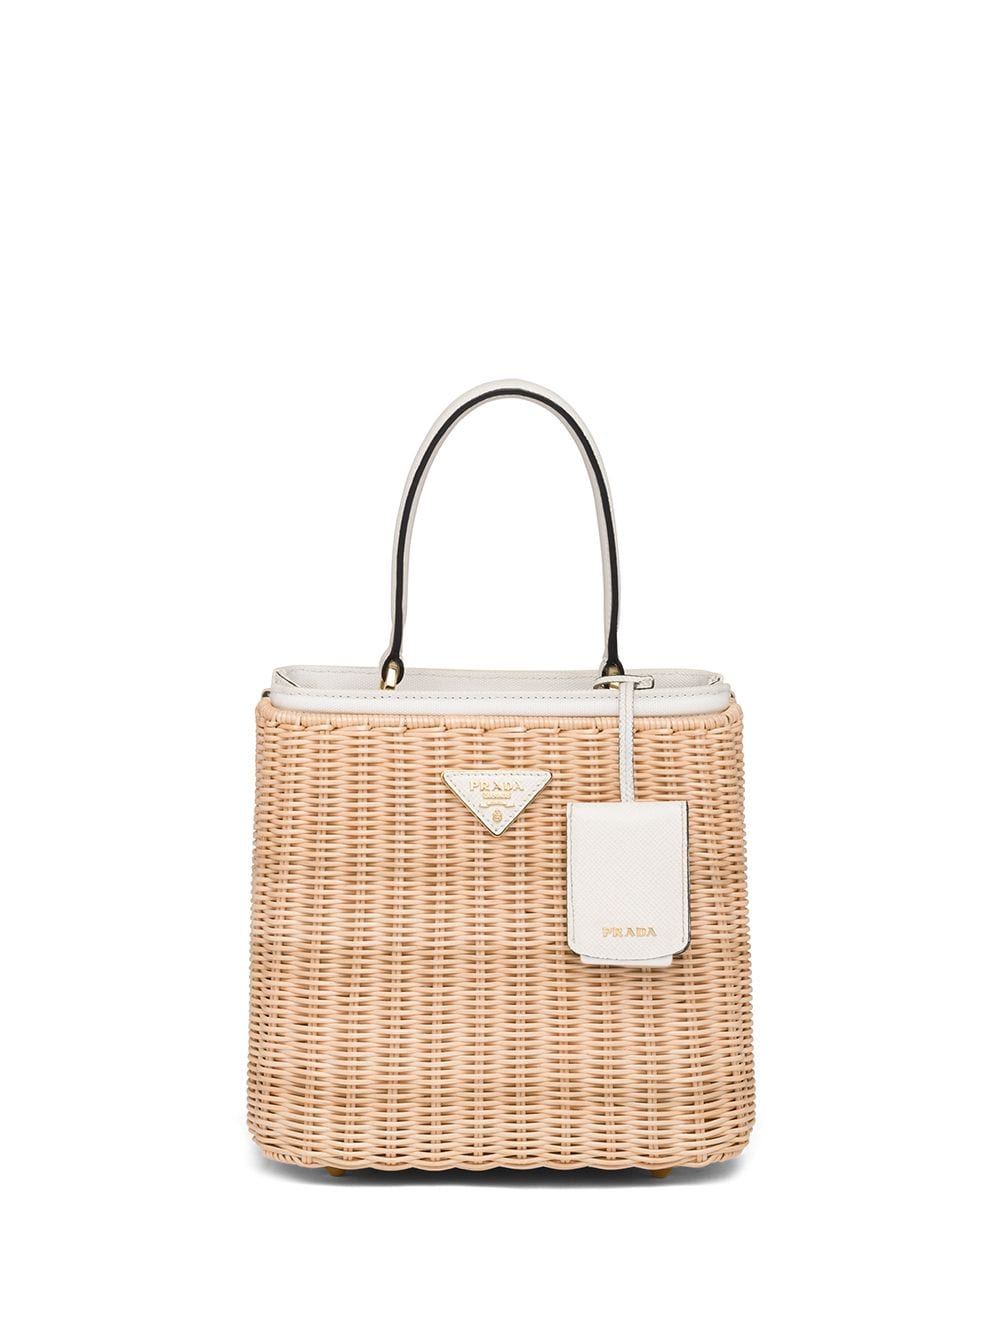 Prada Wicker And Canvas Basket Bag  Bags, Wicker bags, Bags designer  fashion